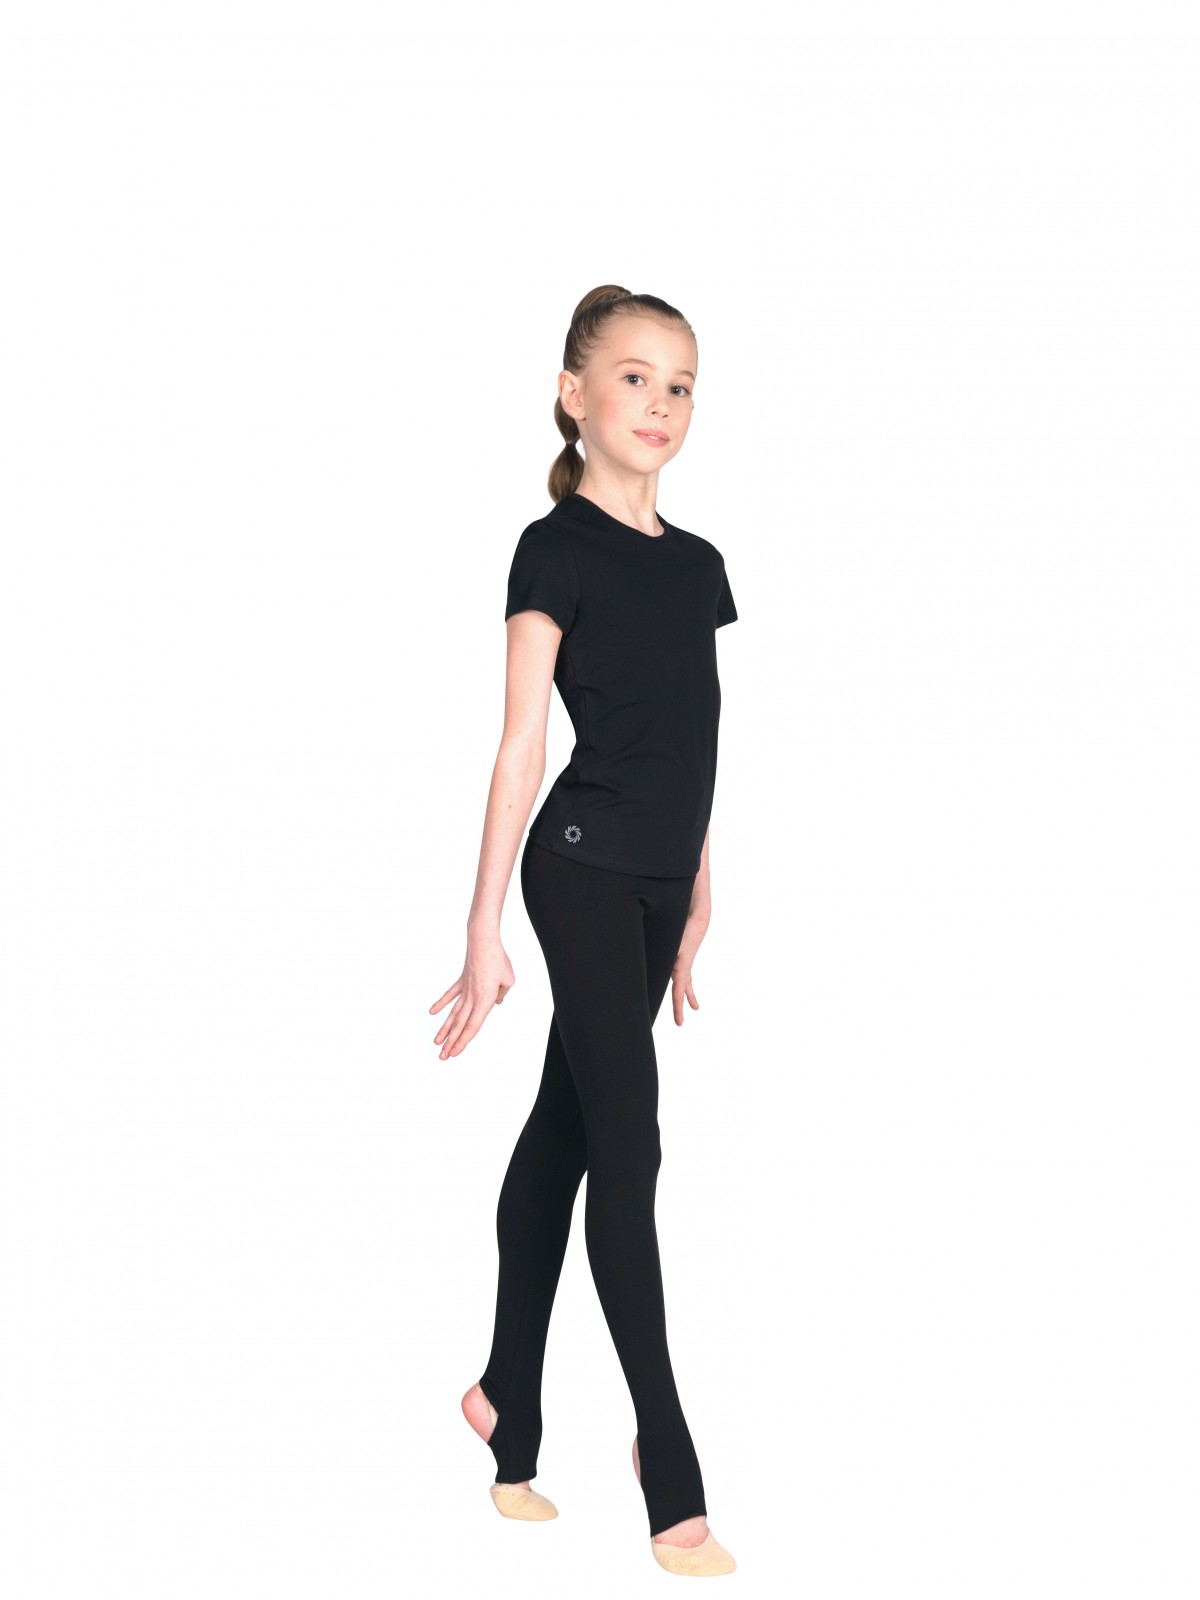 Buy leggings for dance and rhythmic gymnastics Intancio